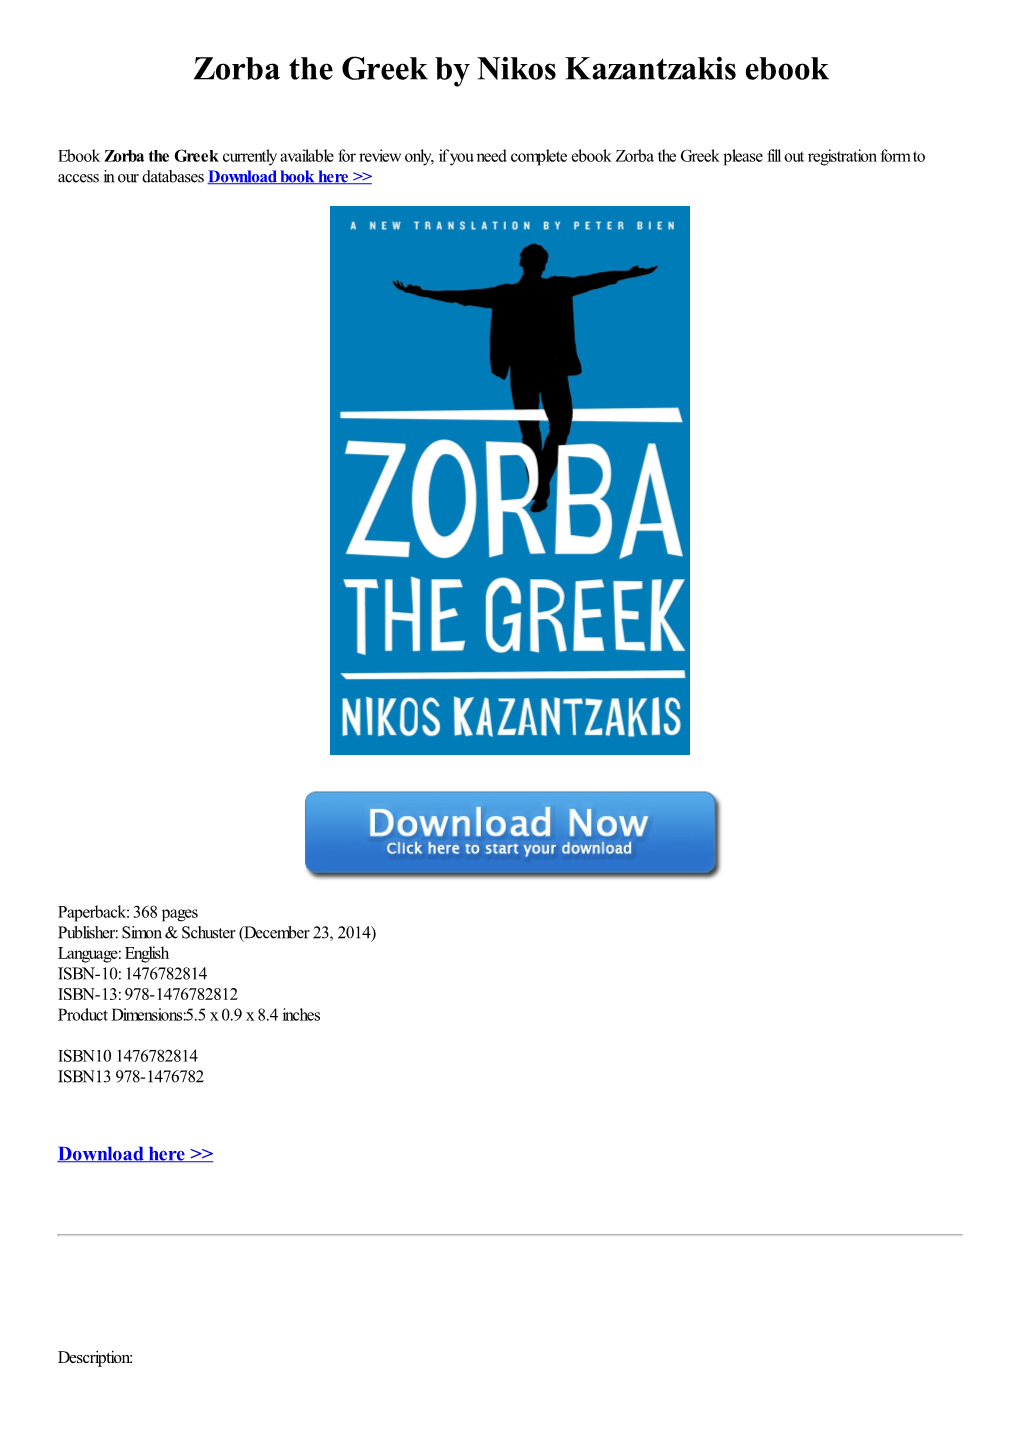 Download Ebook Zorba the Greek by Nikos Kazantzakis Book